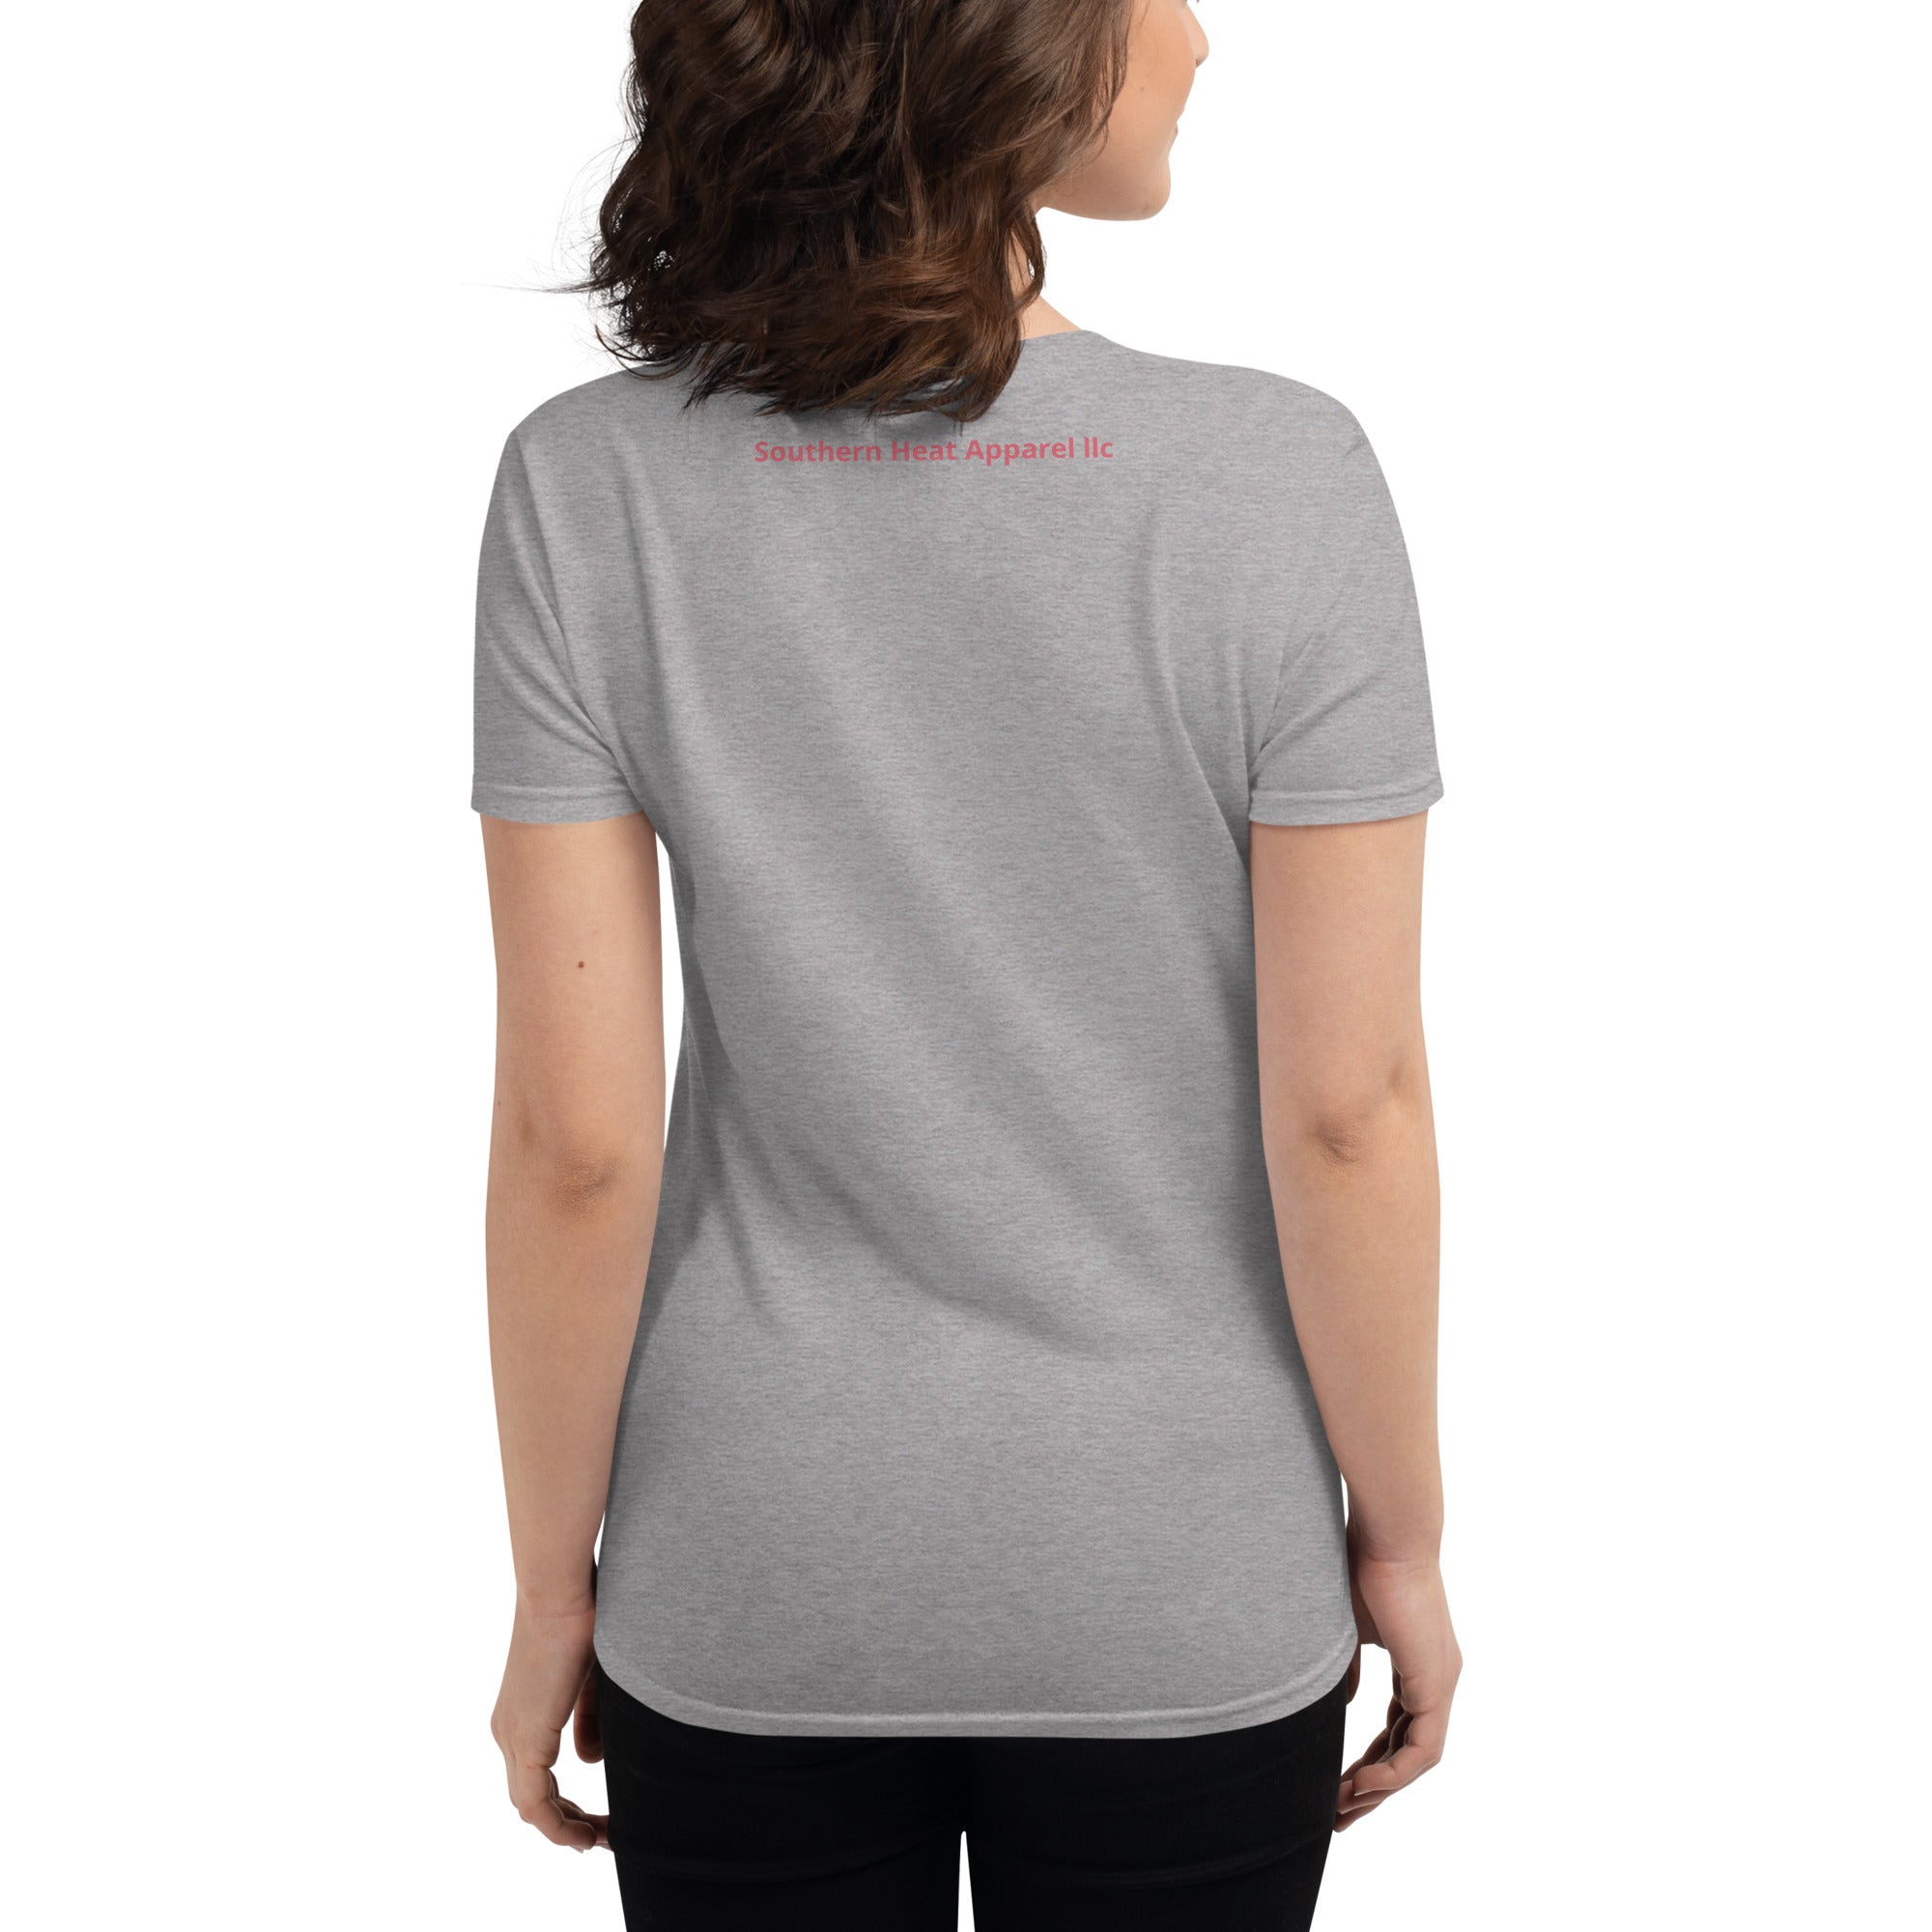 Be the Change-Women's short sleeve t-shirt